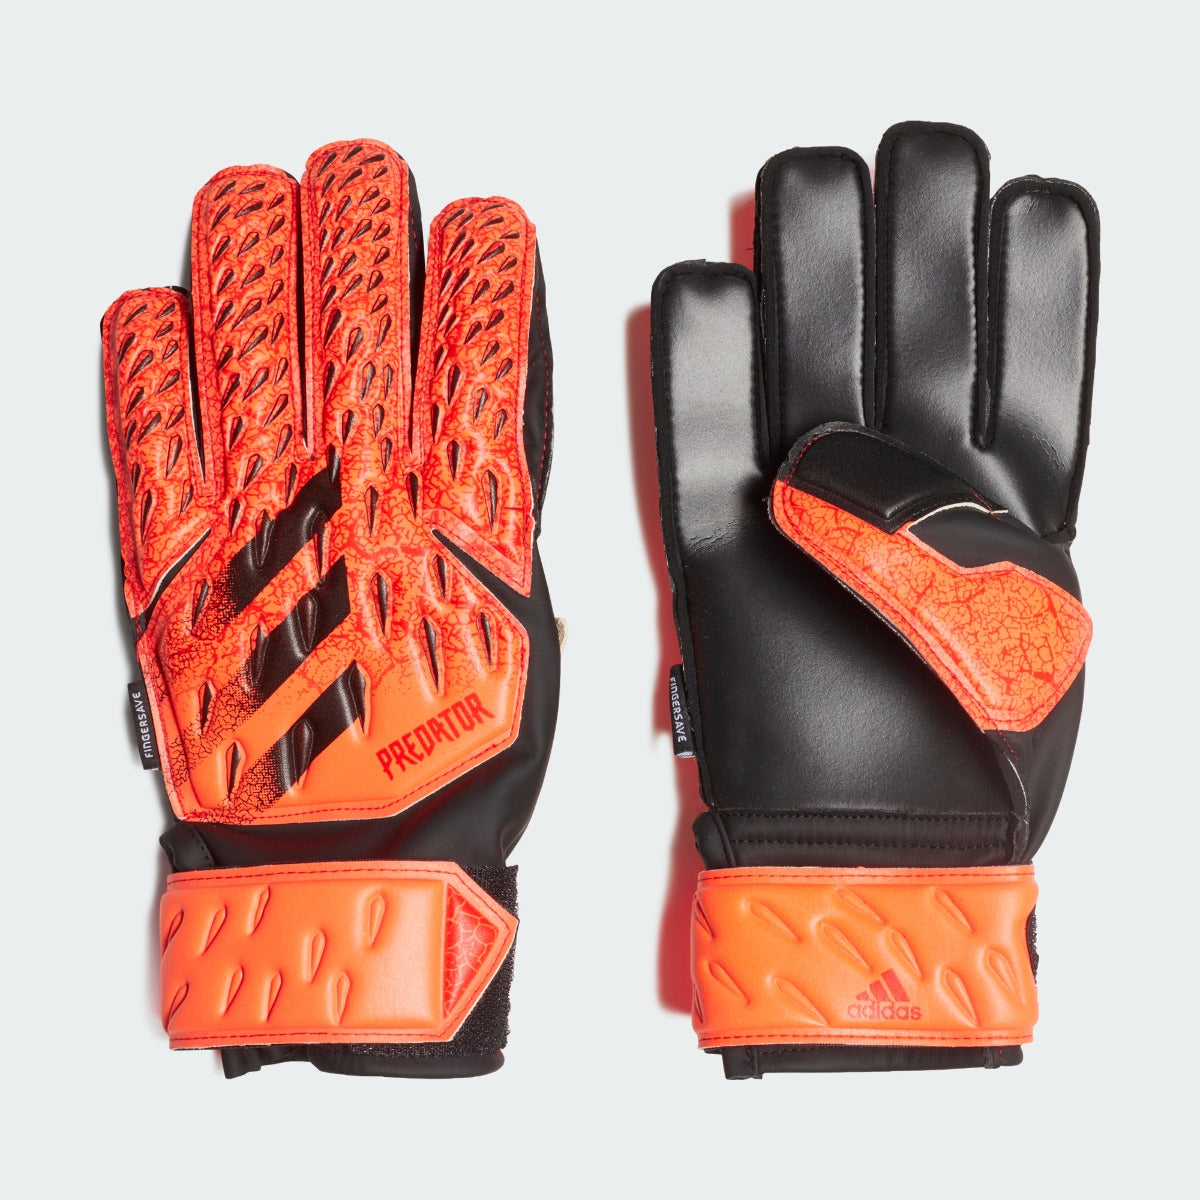 Adidas JR Predator Match FS  Goalkeeper Gloves - Orange-Black (Pair)